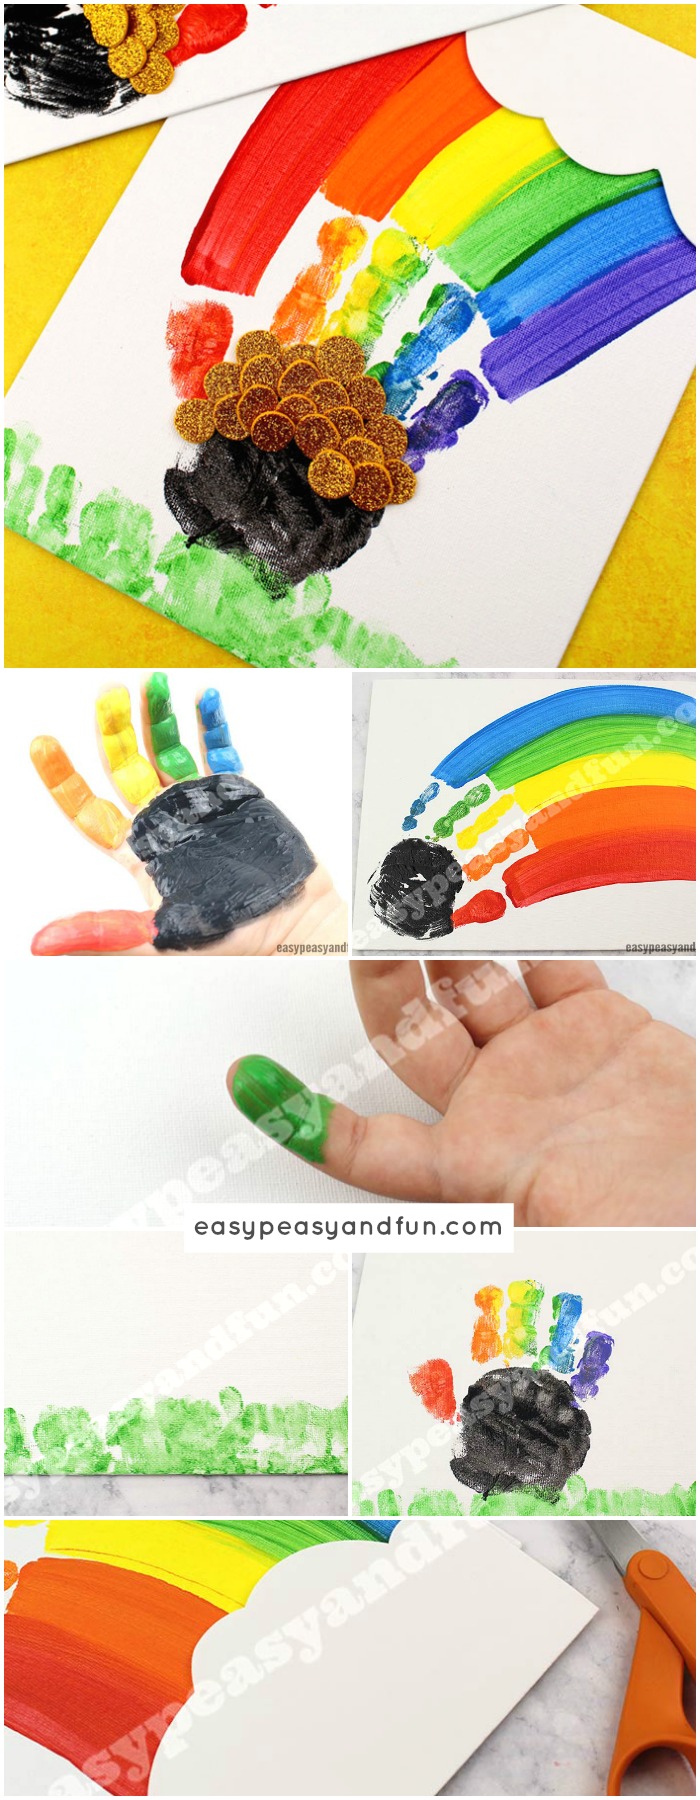 St. Patrick's Day Handprint Rainbow Art Idea for Kids #Handprintart #Rainbowart #artforkids